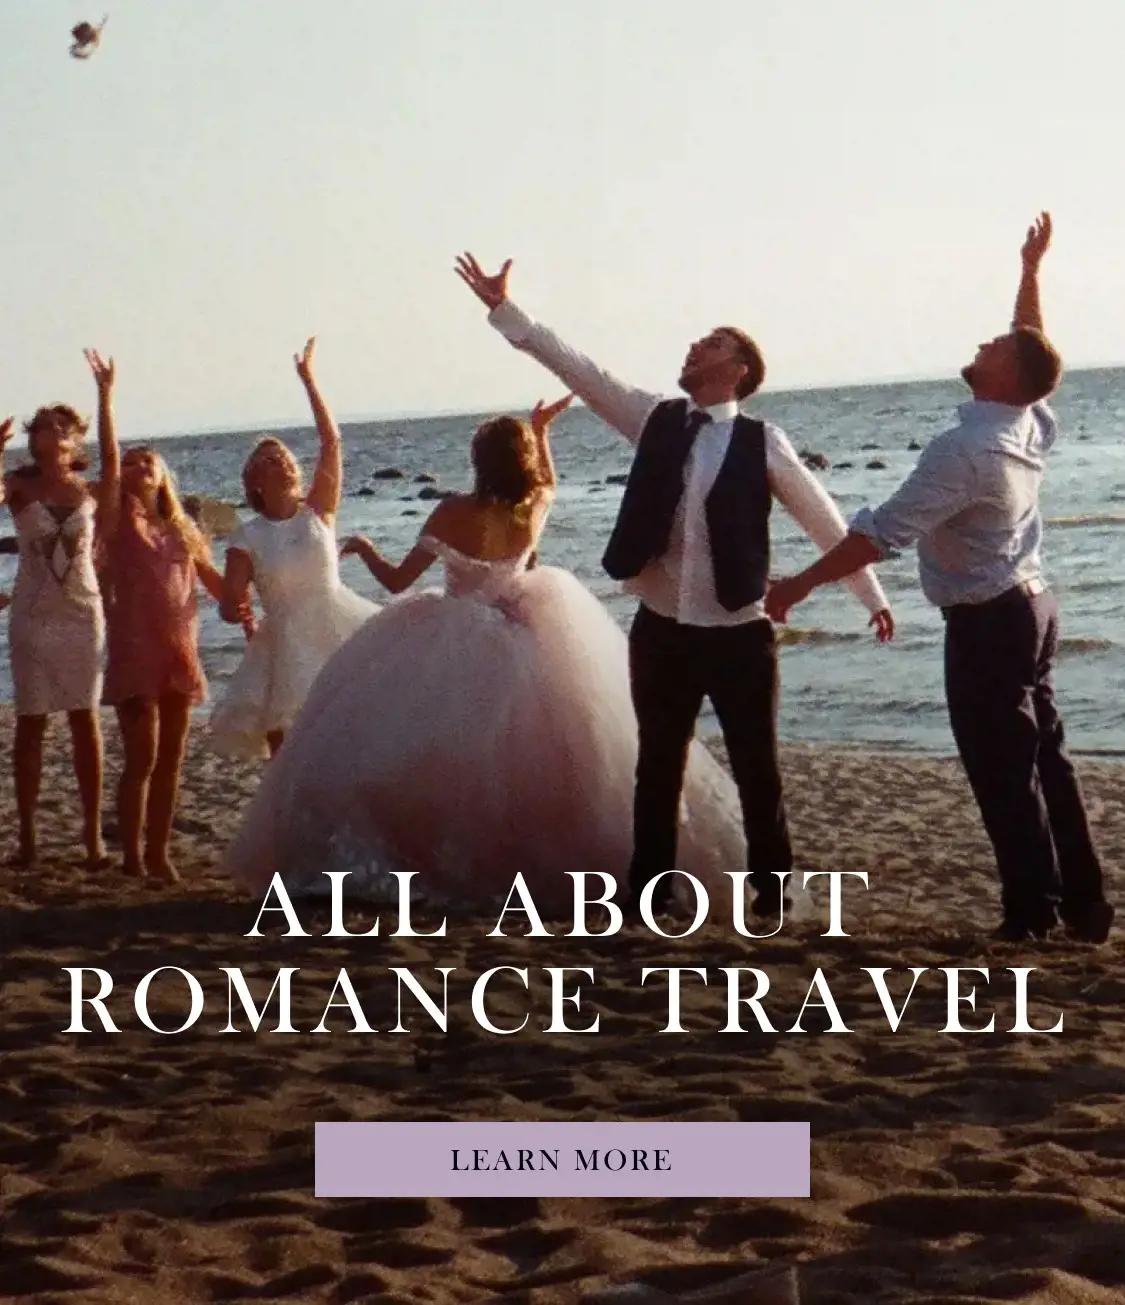 Romance Travel Mobile